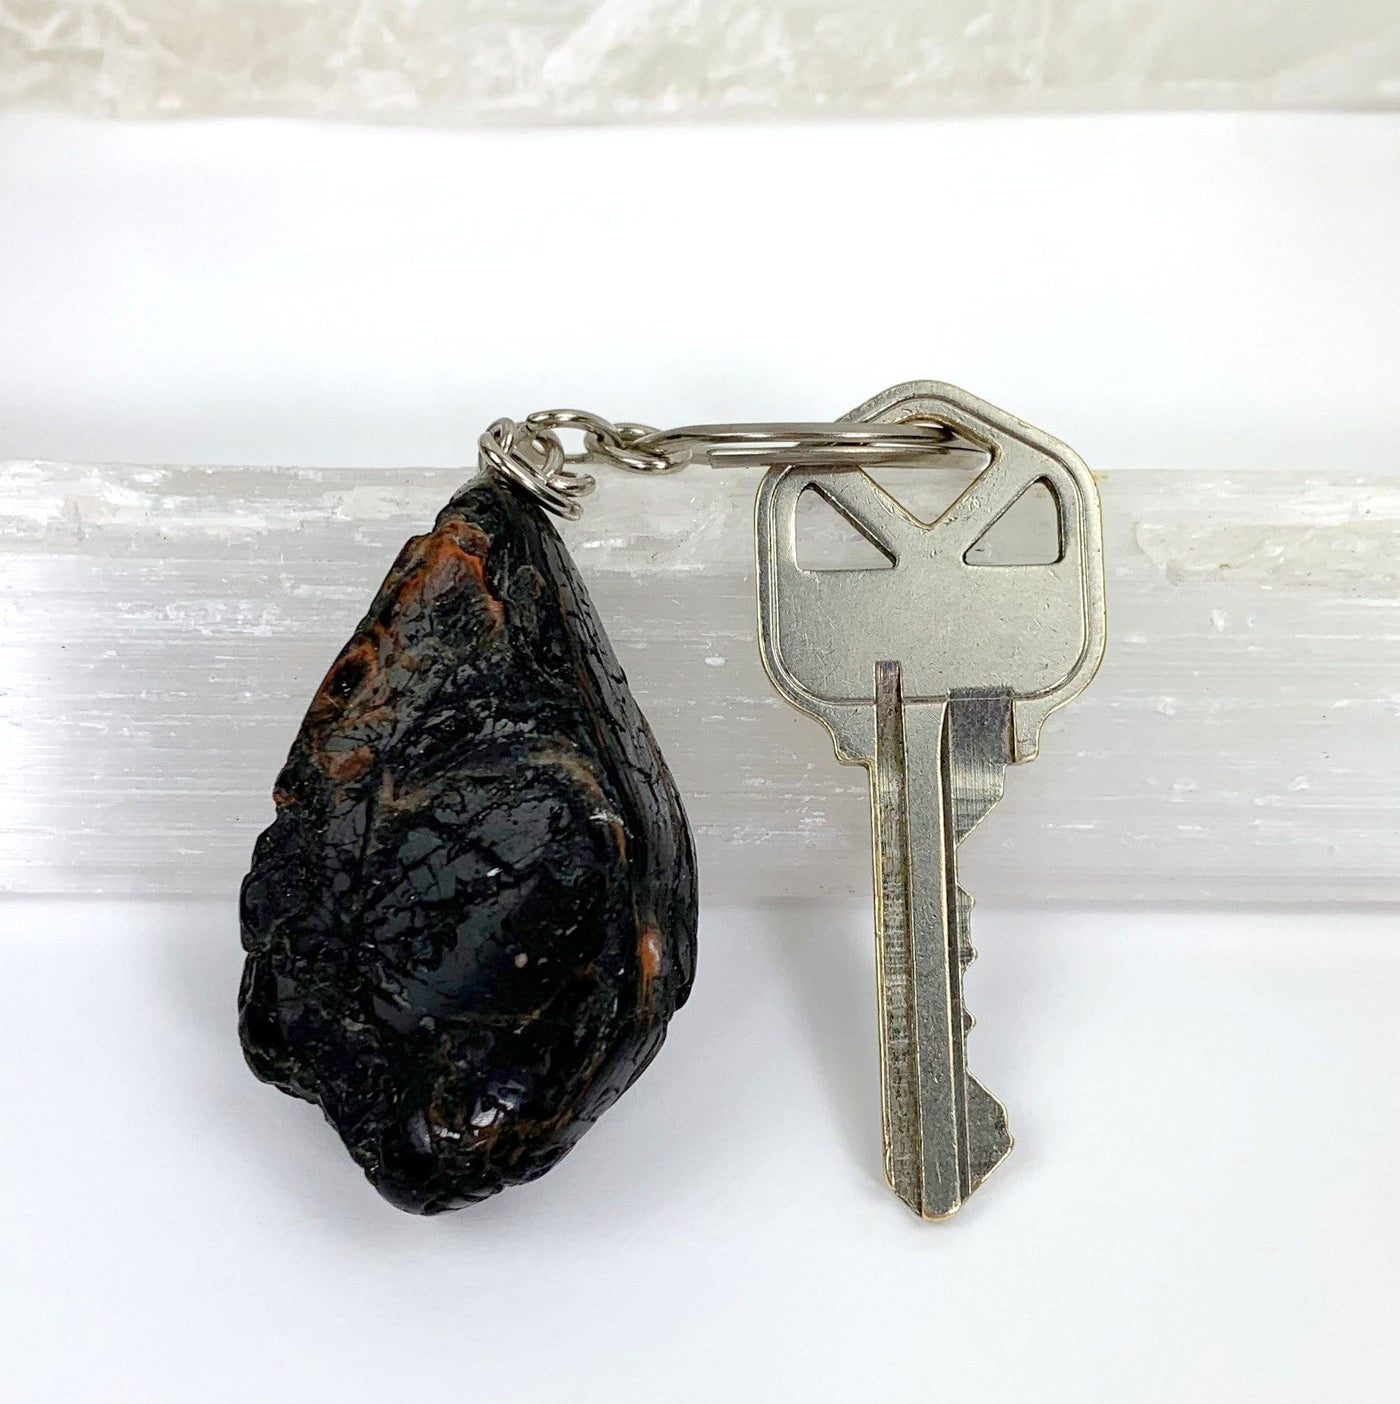 toourmaline with hematite keychain with a key